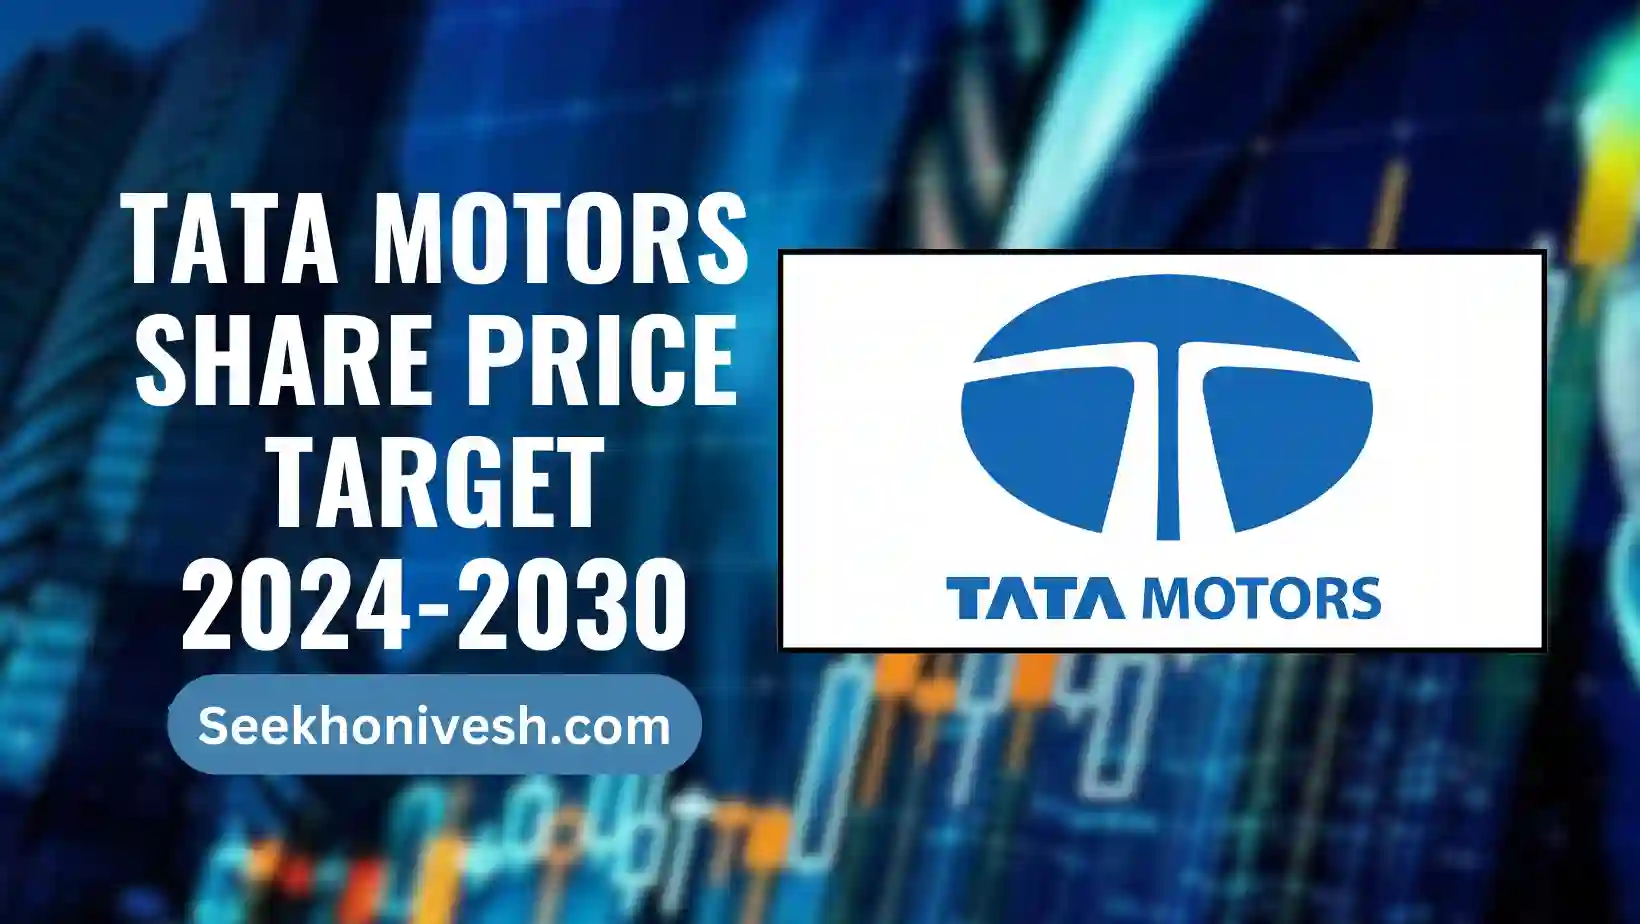 TATA Motors Share Price Target 2025-2030, Full Analysis